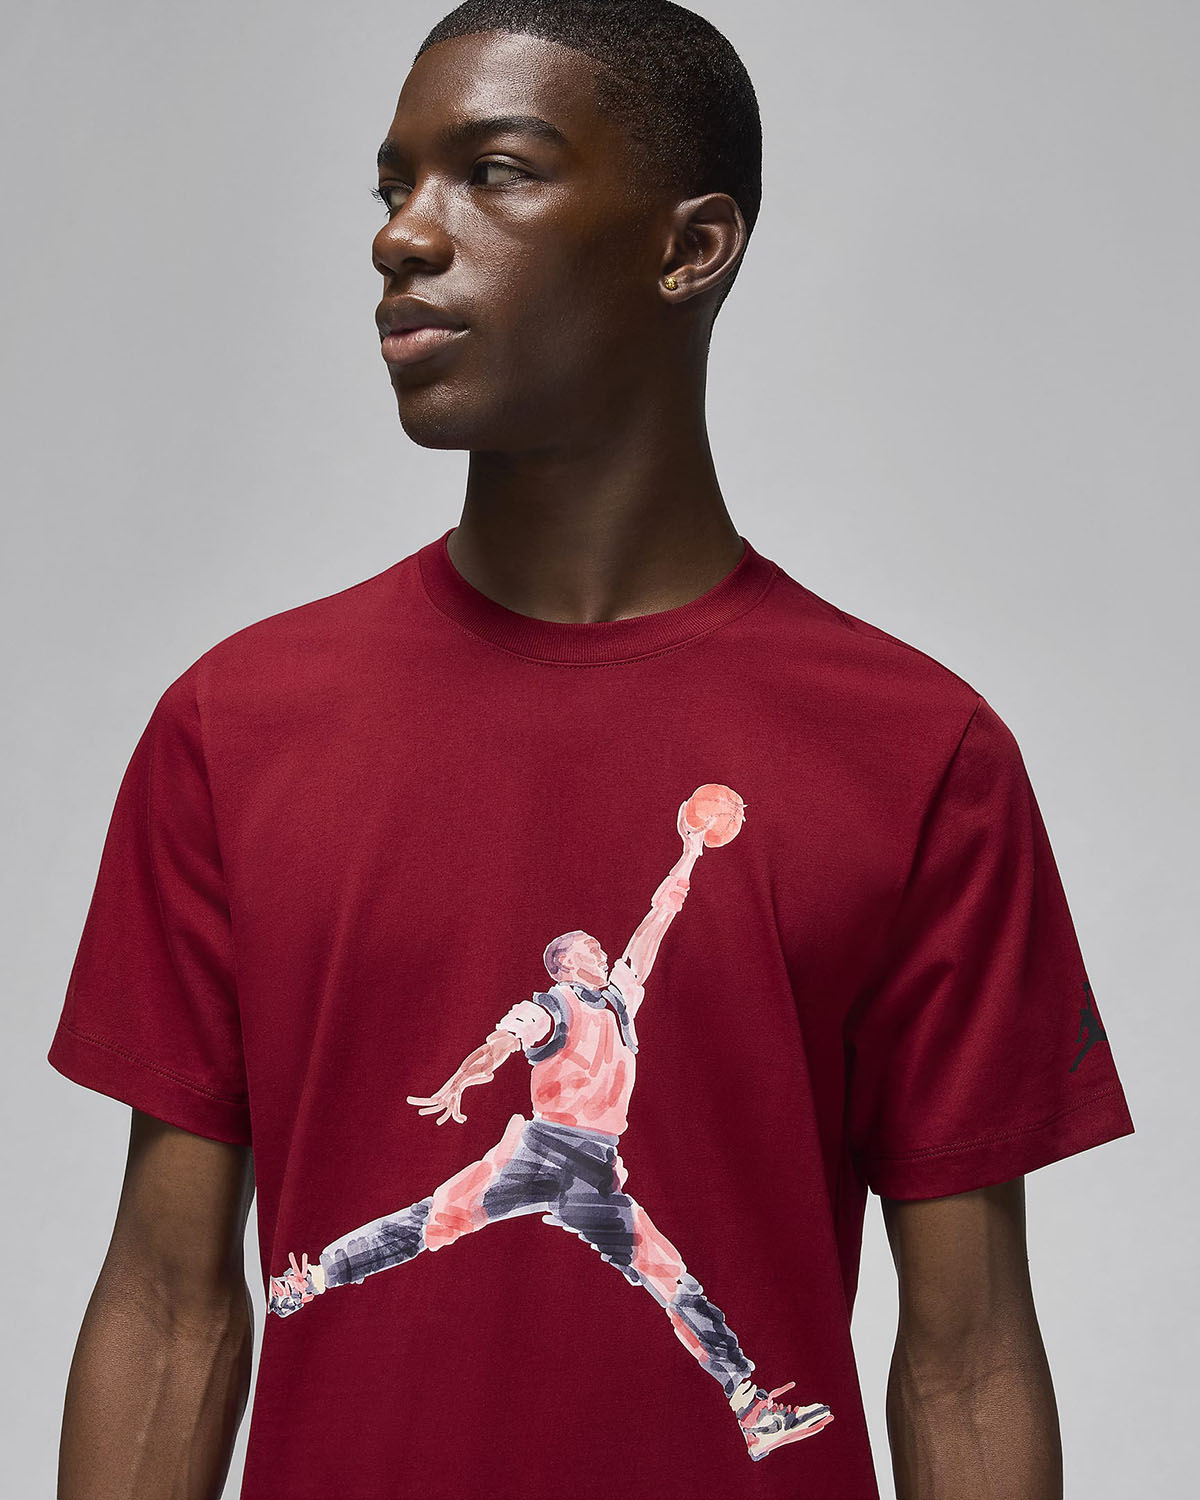 Jordan Year Jumpman T Shirt Team Red 2